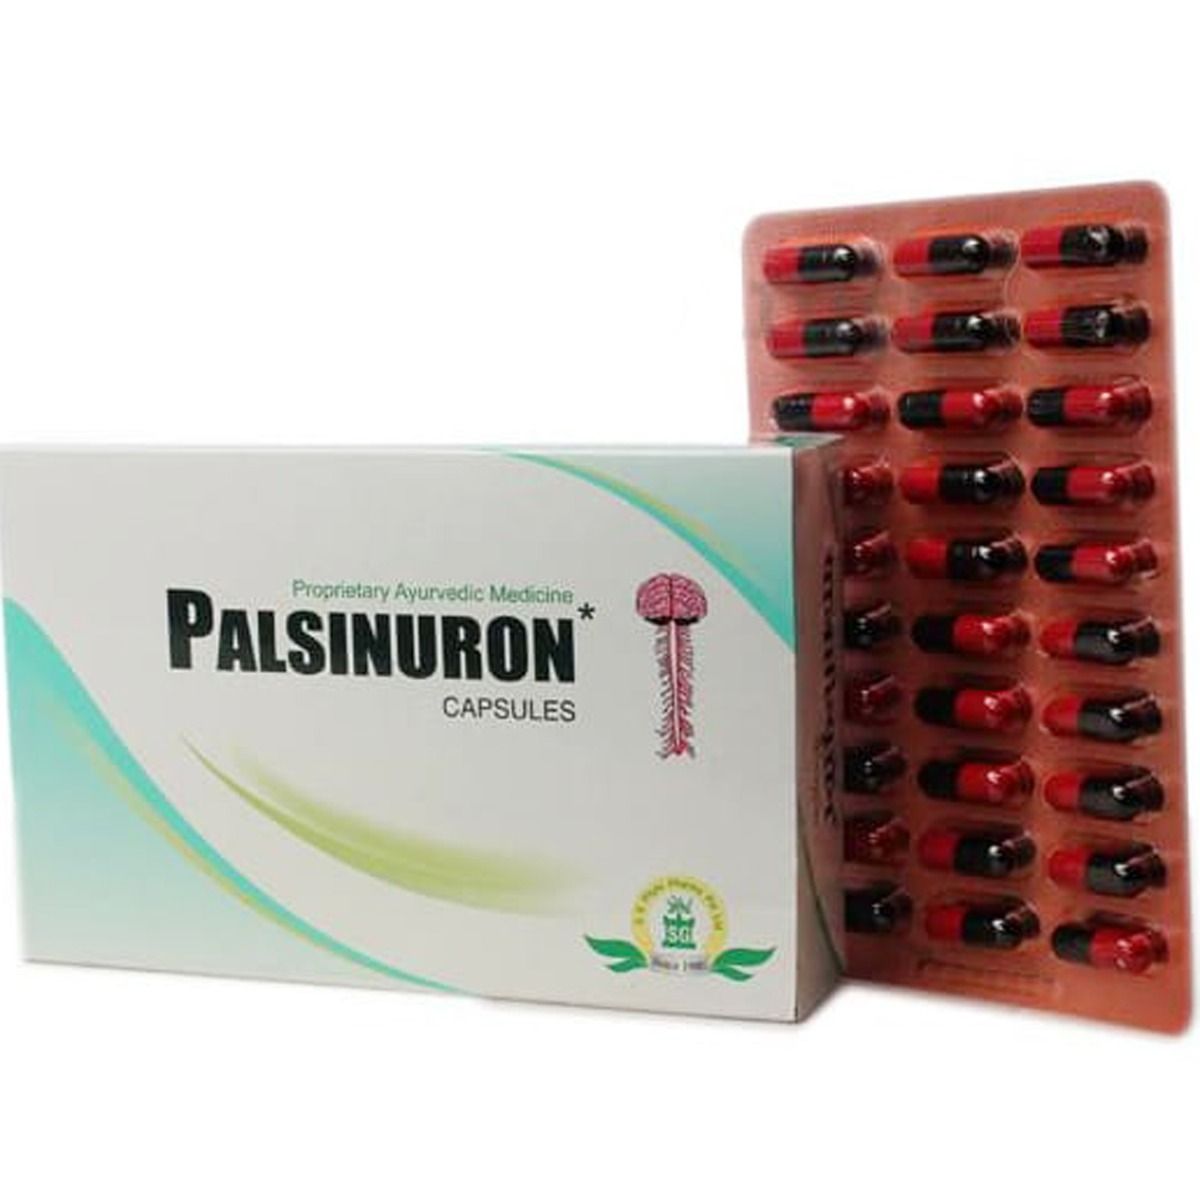 Buy Palsinuron, 30 Capsules Online